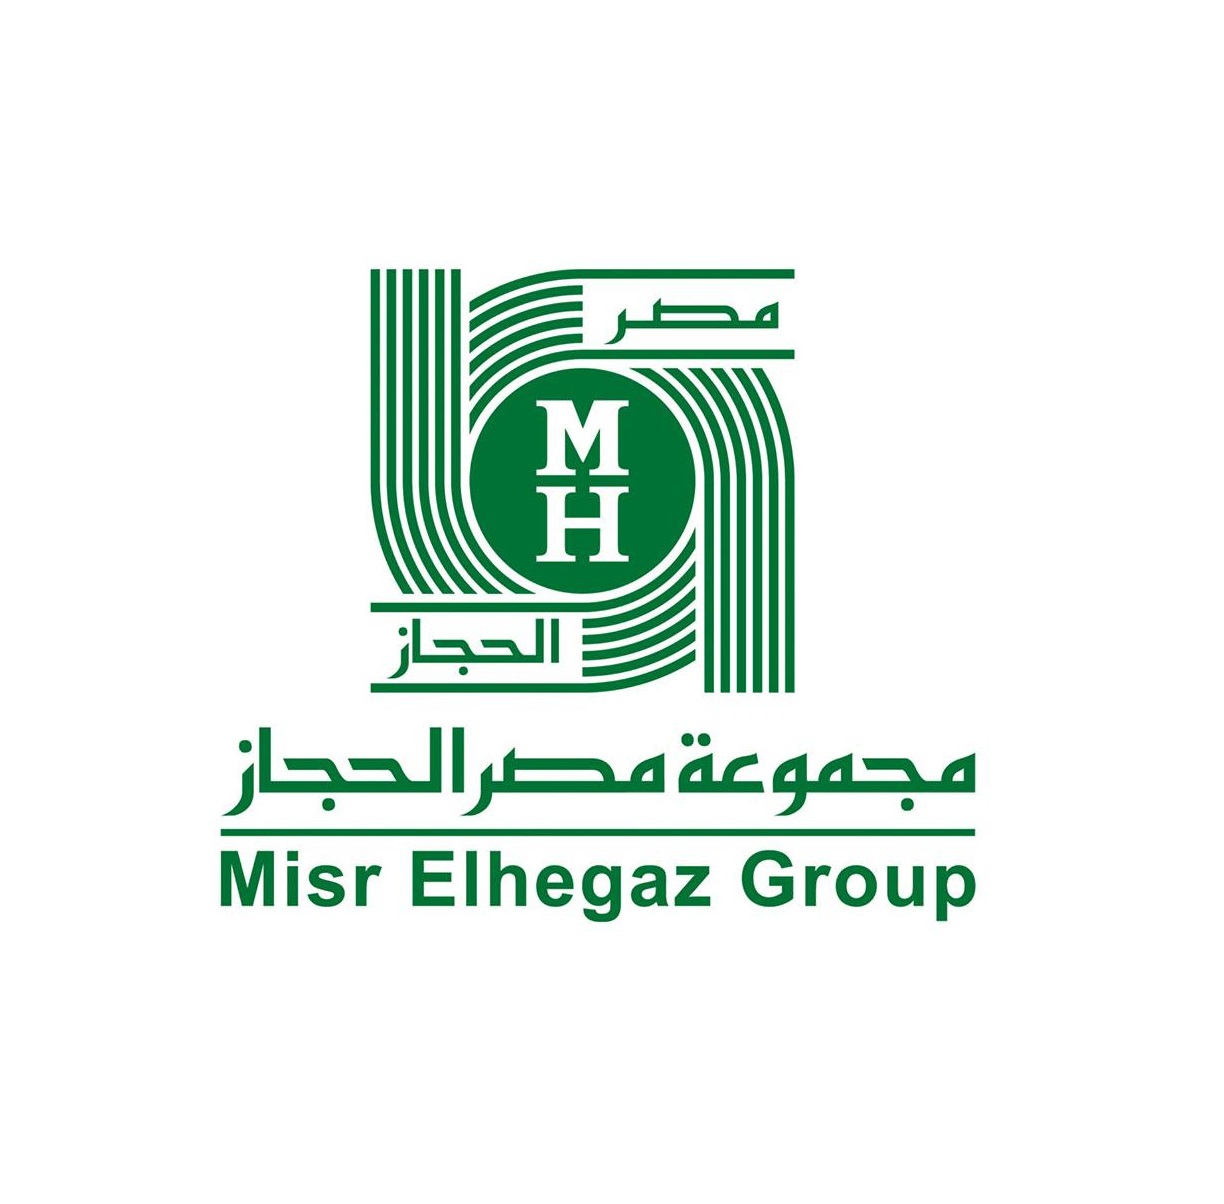 Misr EL Hegaz Group